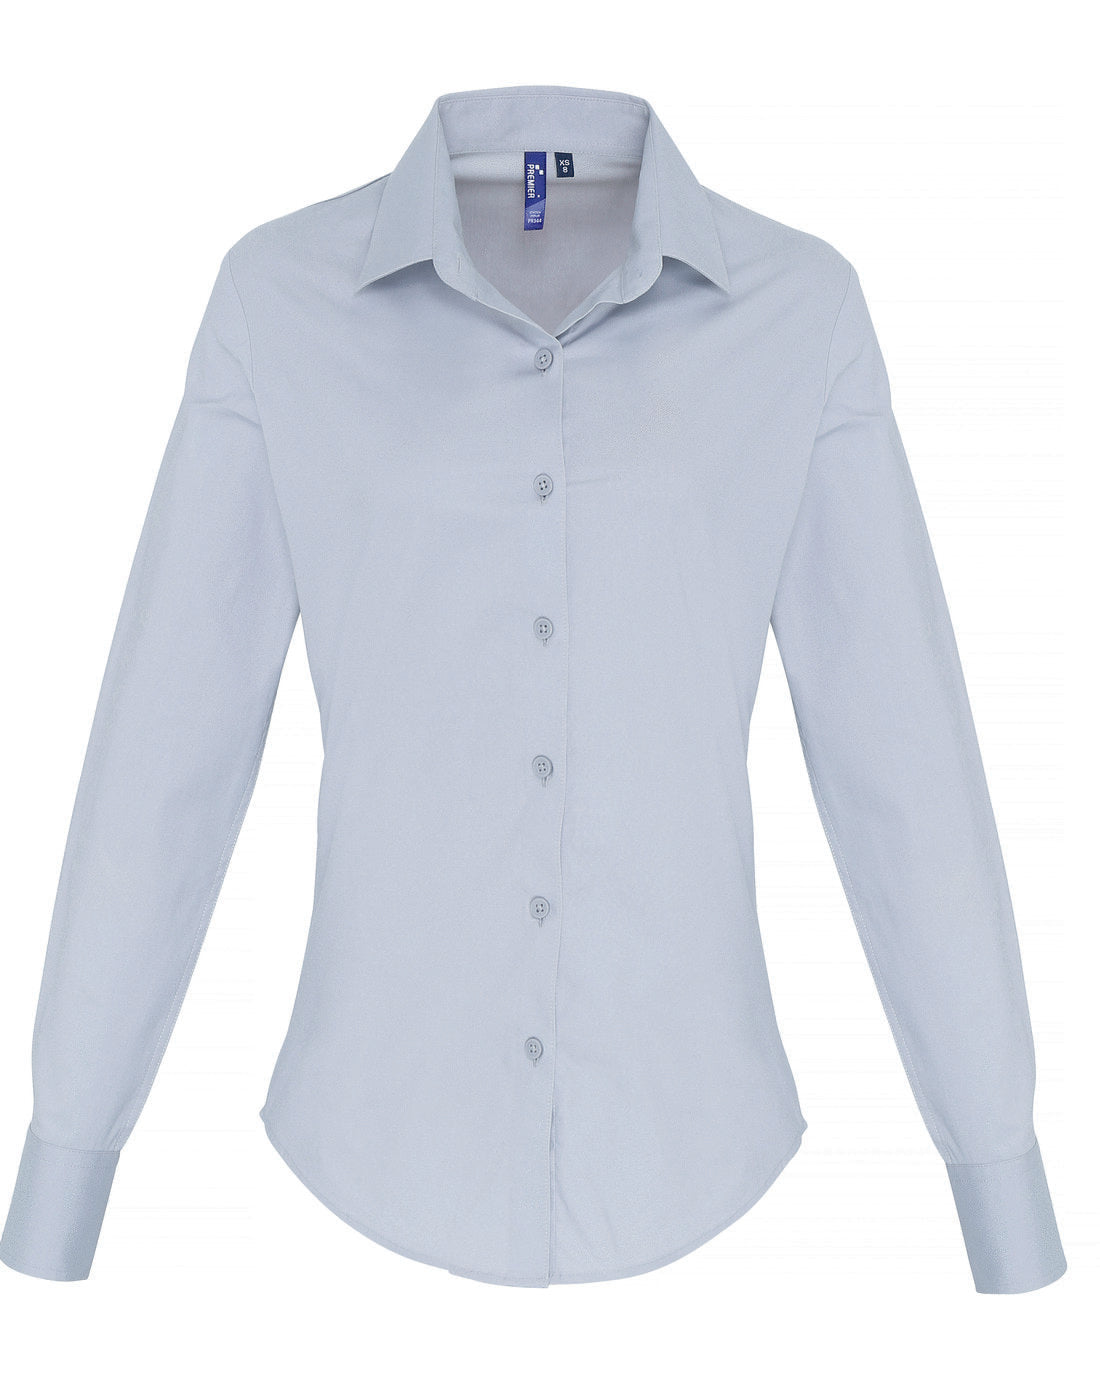 Premier Women's Stretch-Fit Cotton Poplin Long Sleeve Shirt